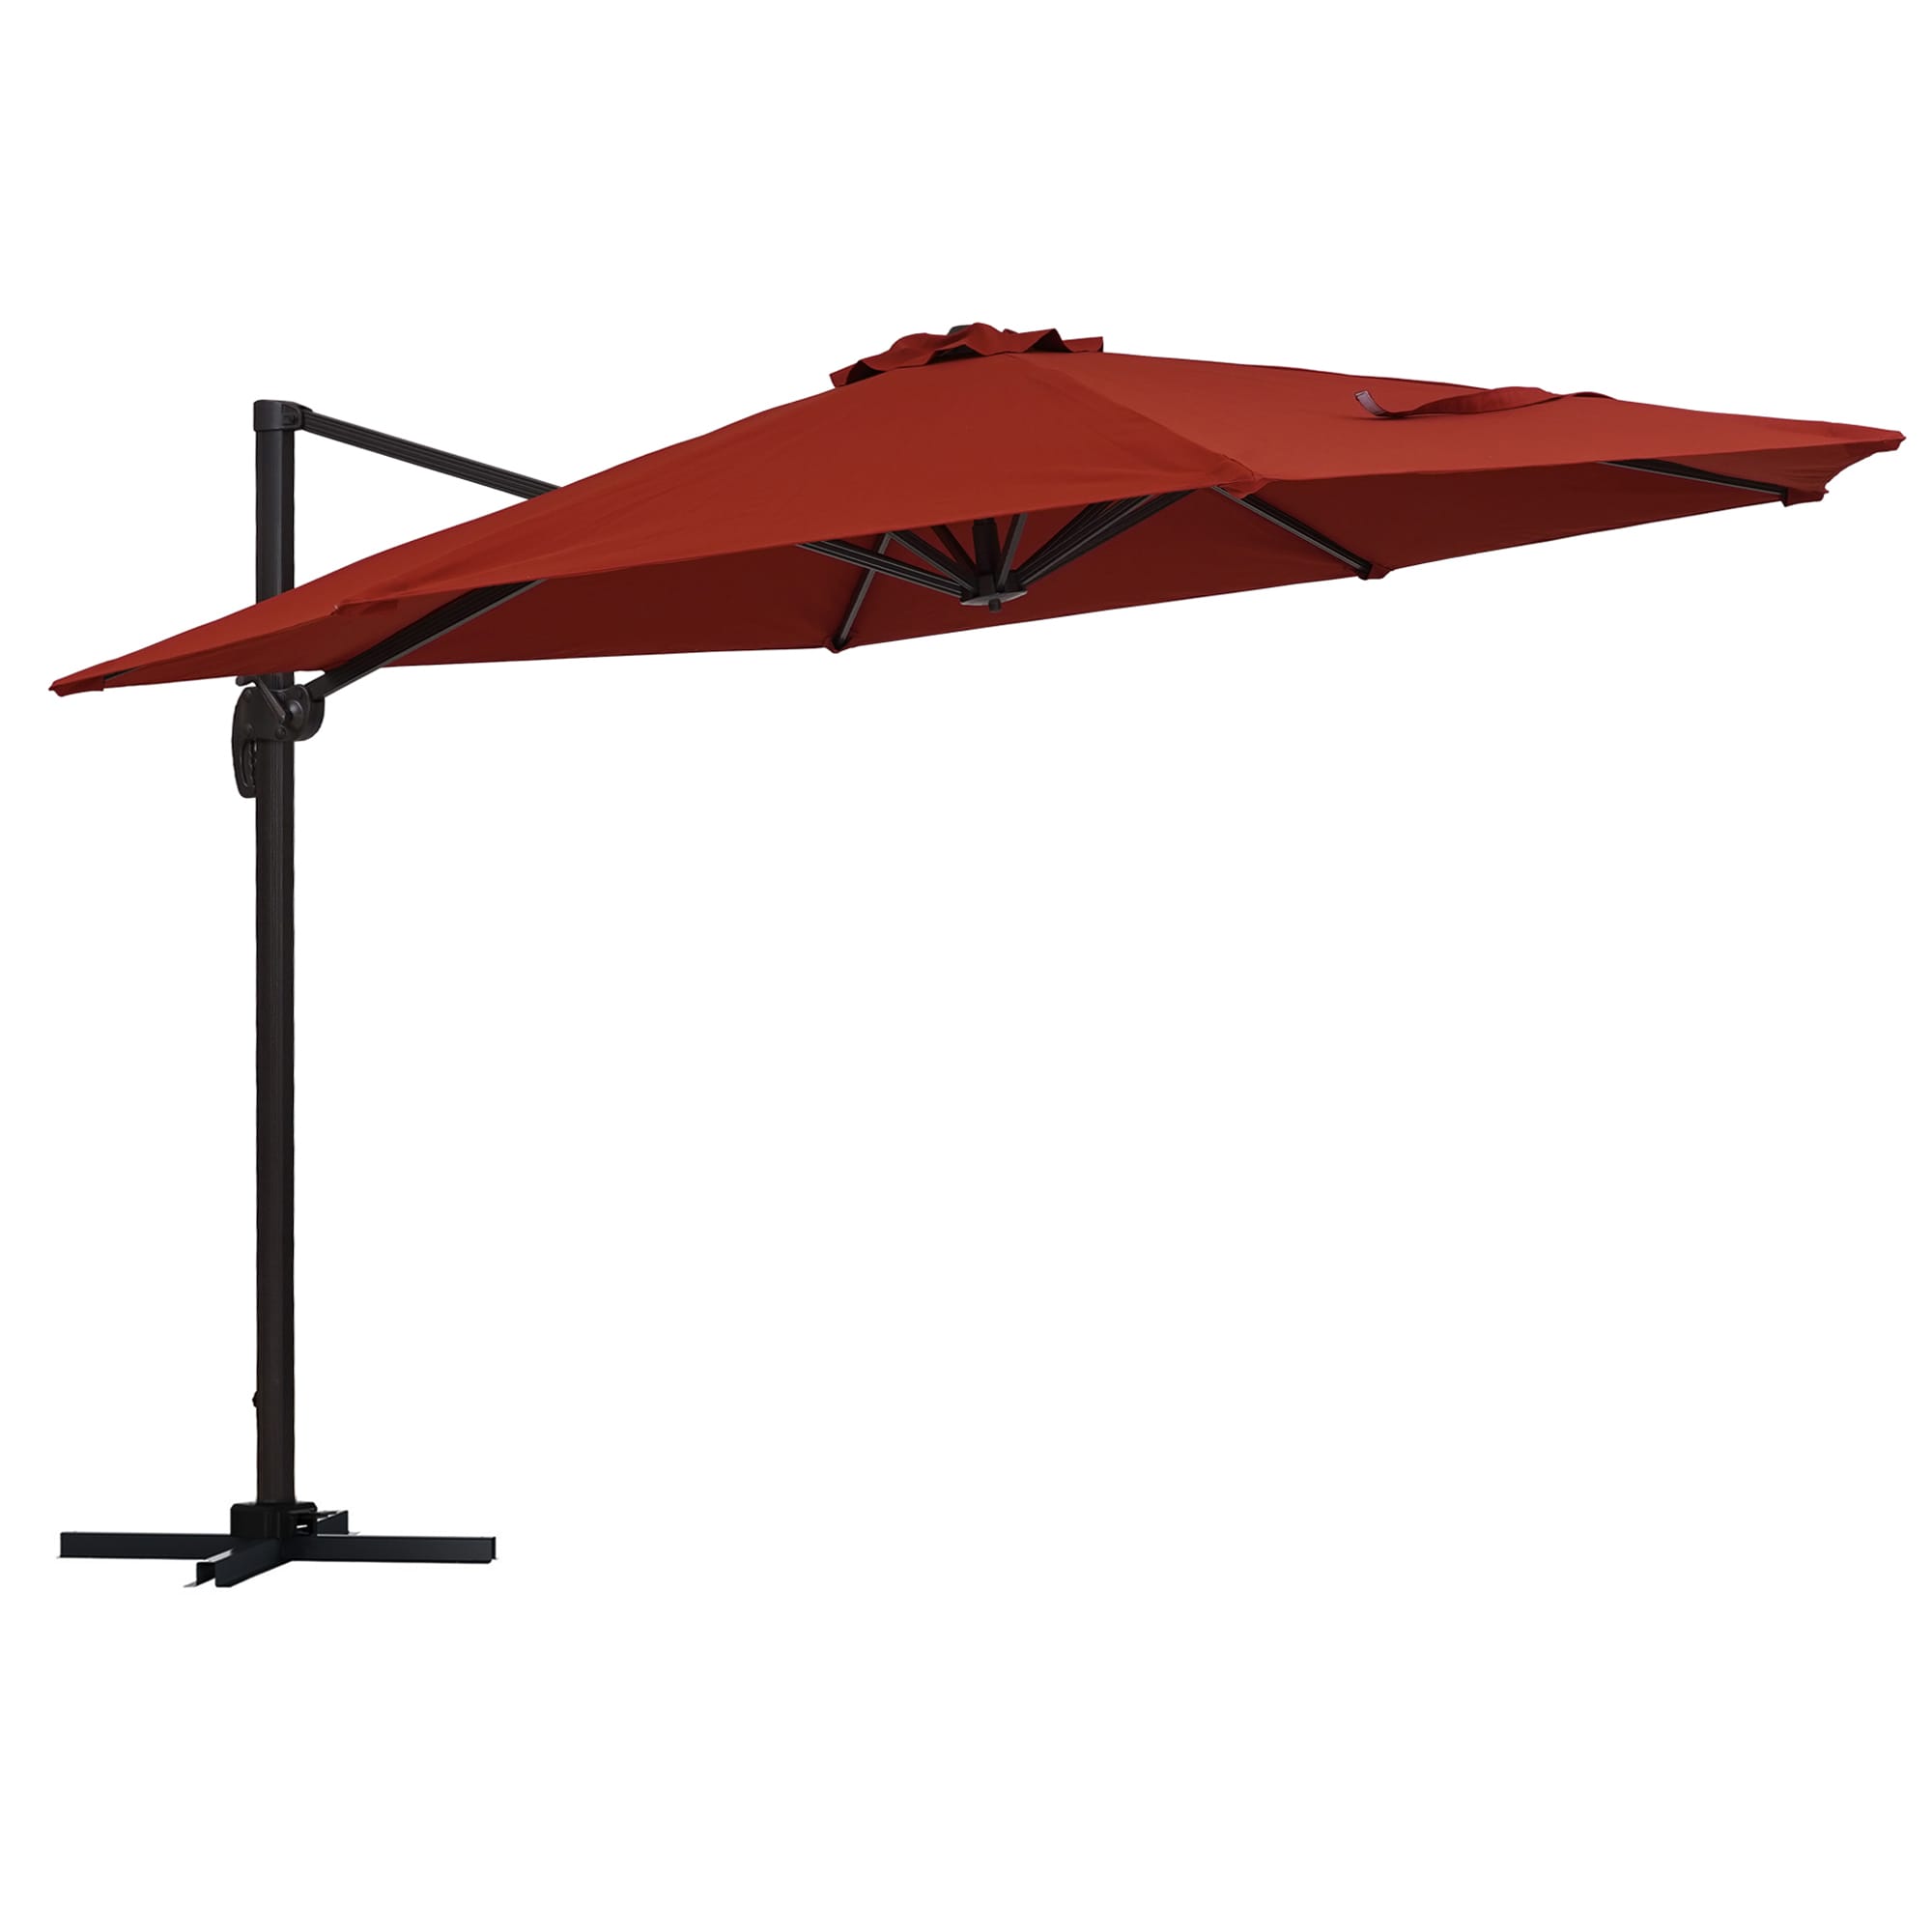 CASAINC 11Ft Outdoor Market Cantilever Patio Umbrella with Crank (without base)